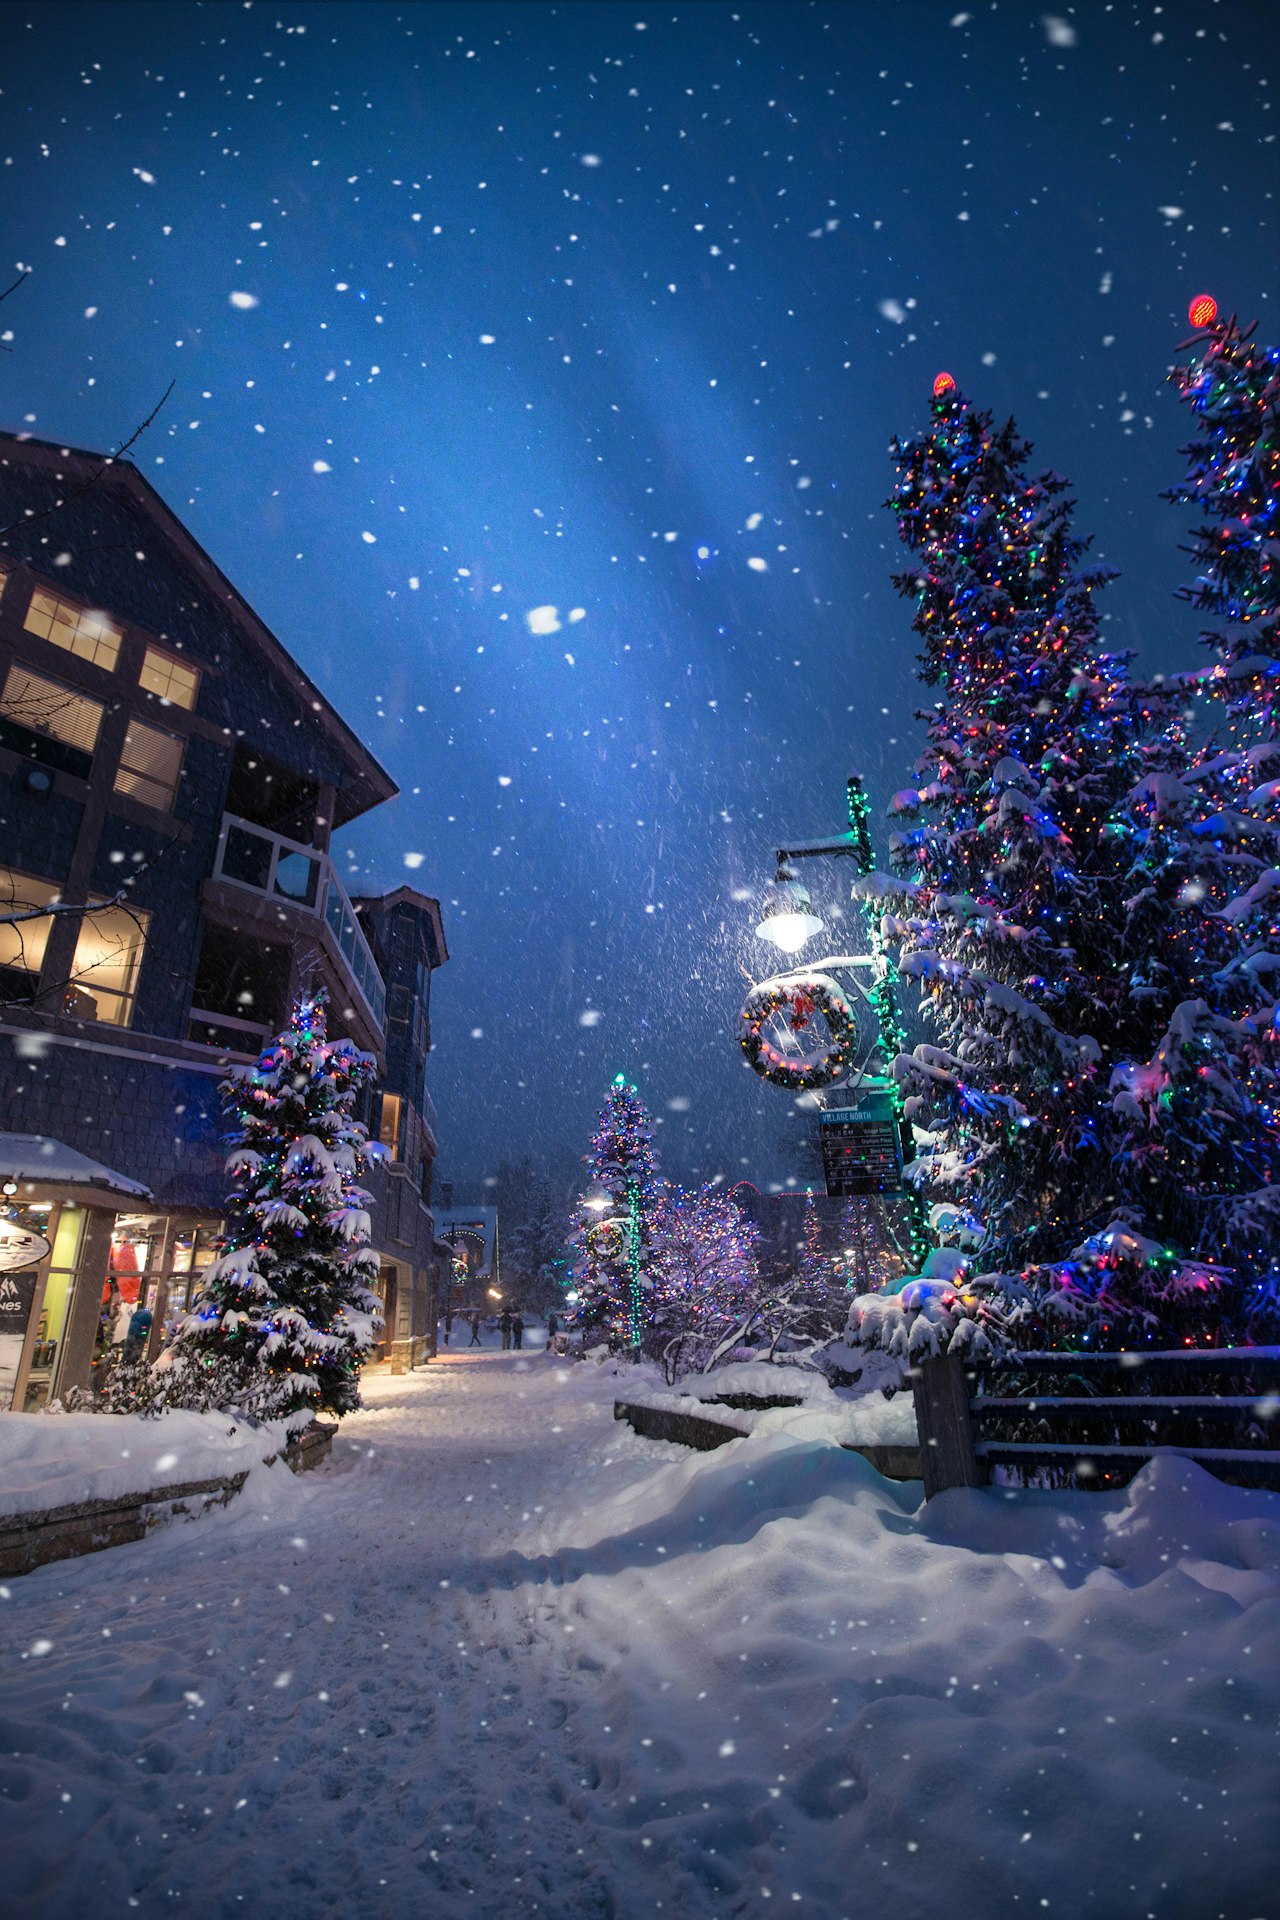 Christmas in Aspen: Enjoy the Holiday Spirit!